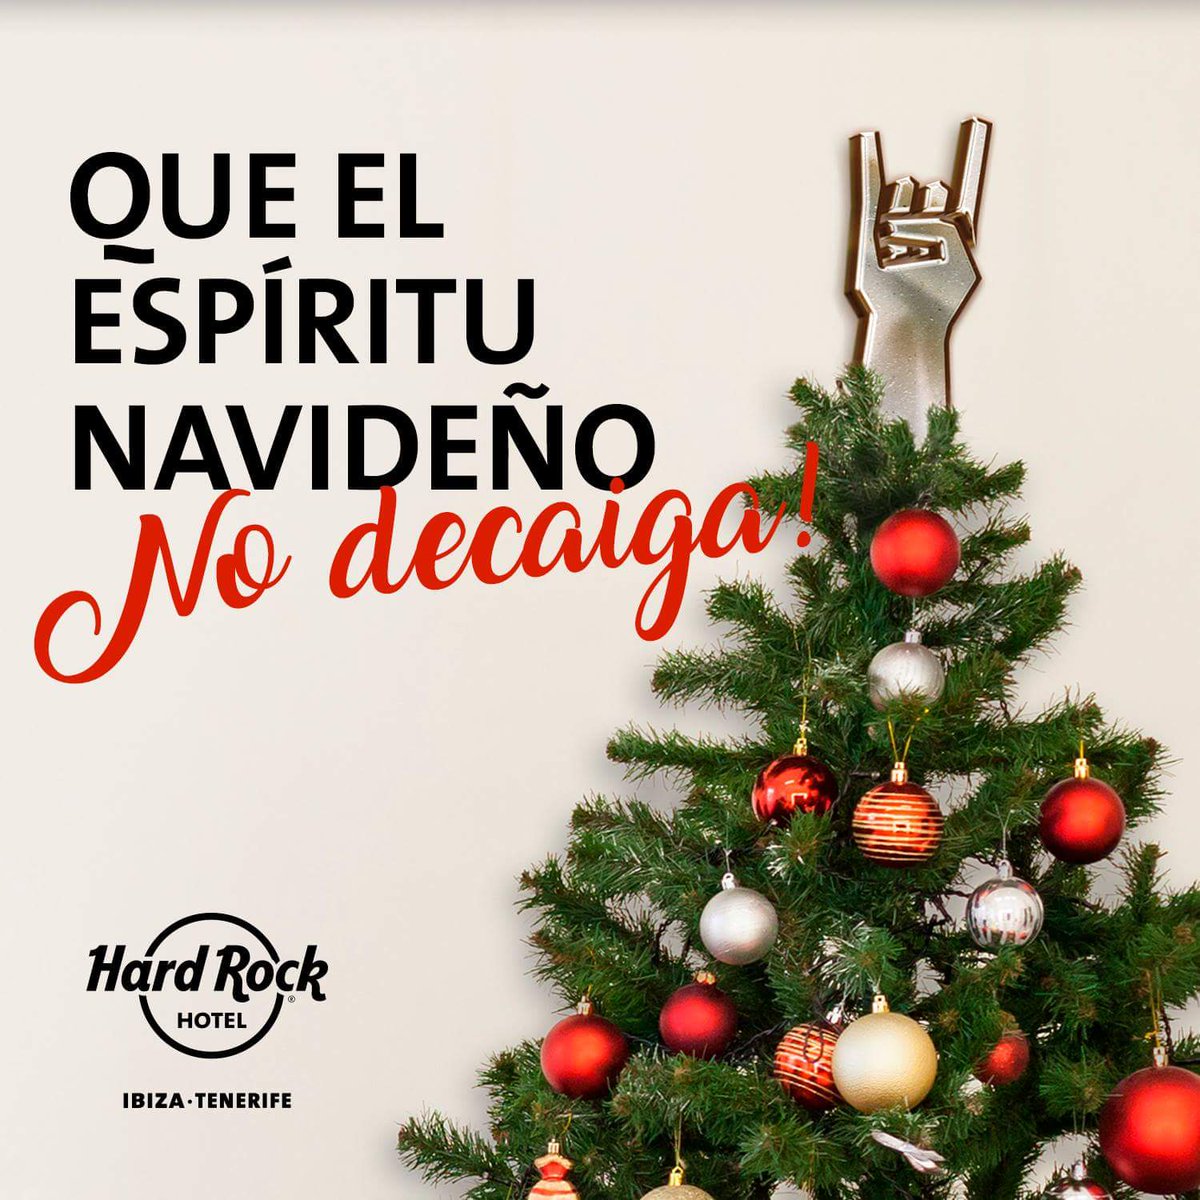 Hard Rock Hotel Tenerife on Twitter: 